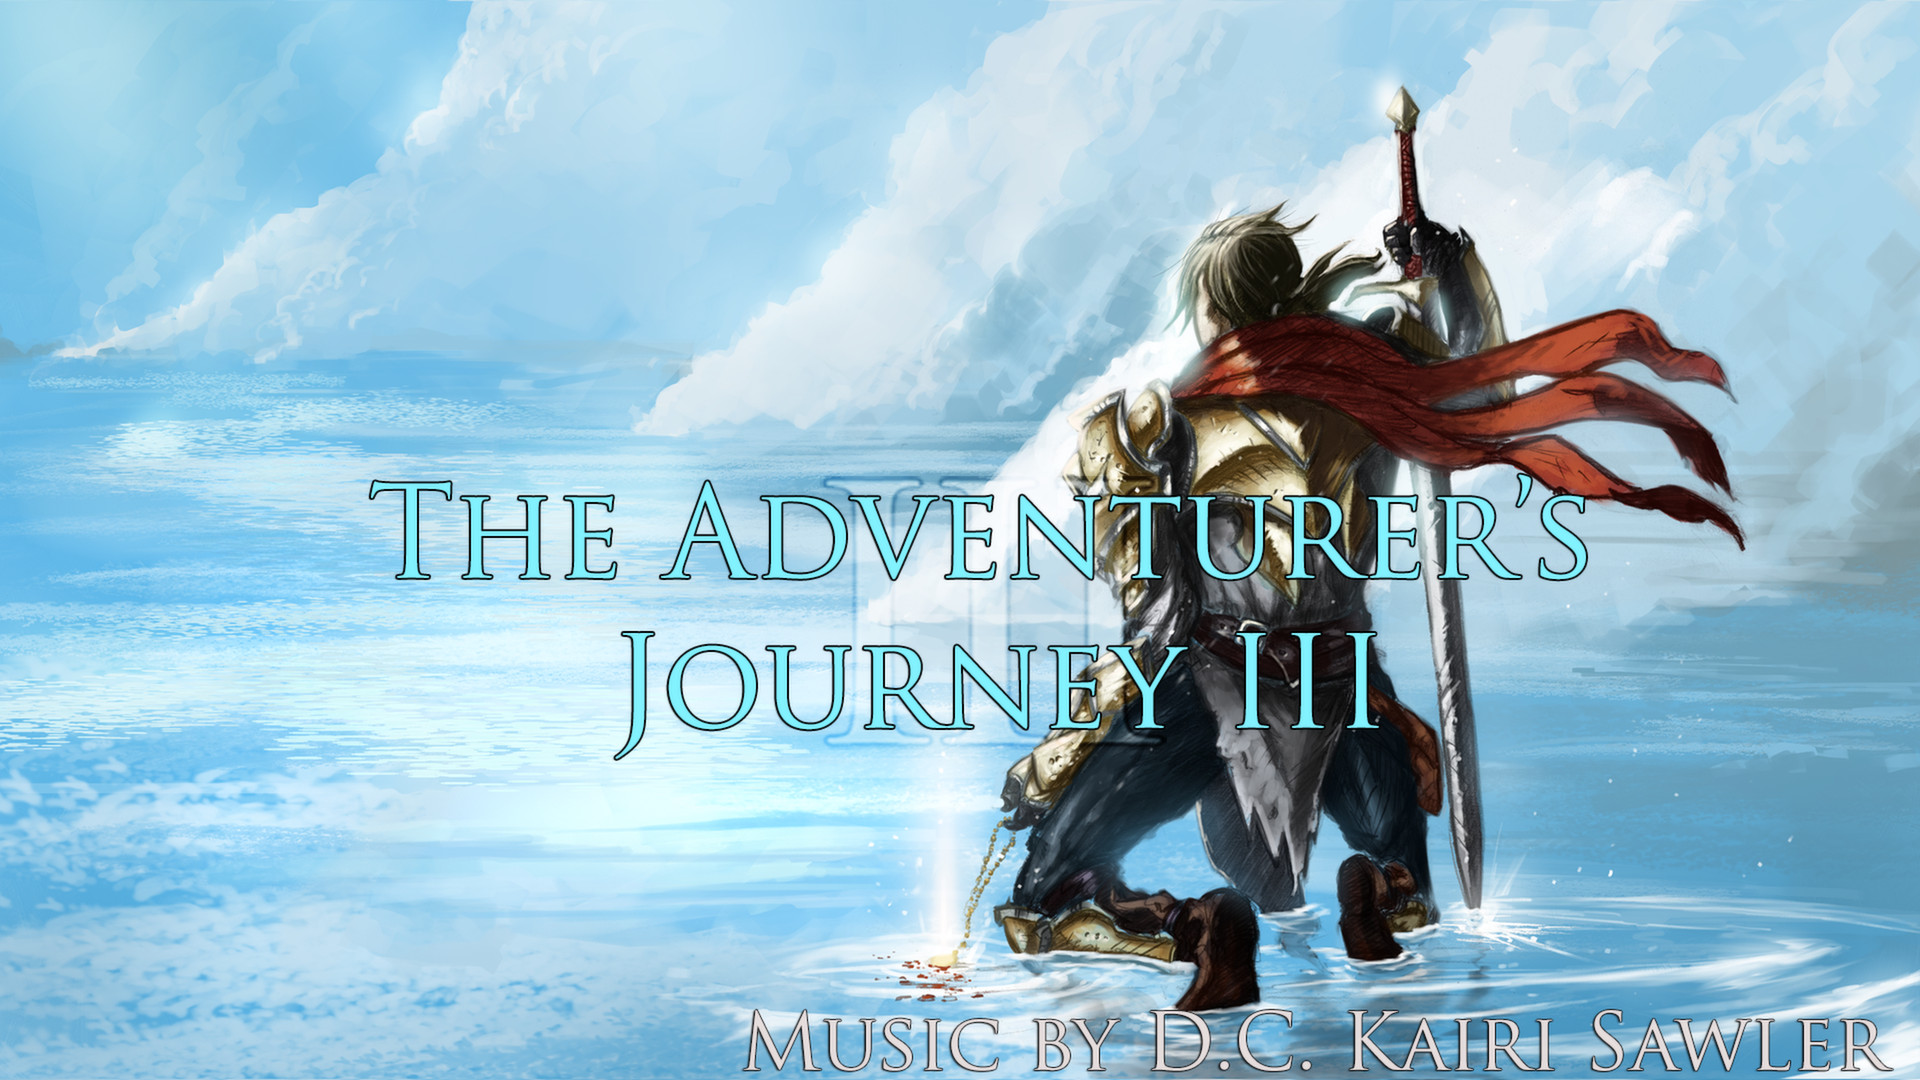 [$ 4.51] RPG Maker VX Ace - The Adventurer's Journey III DLC Steam CD Key